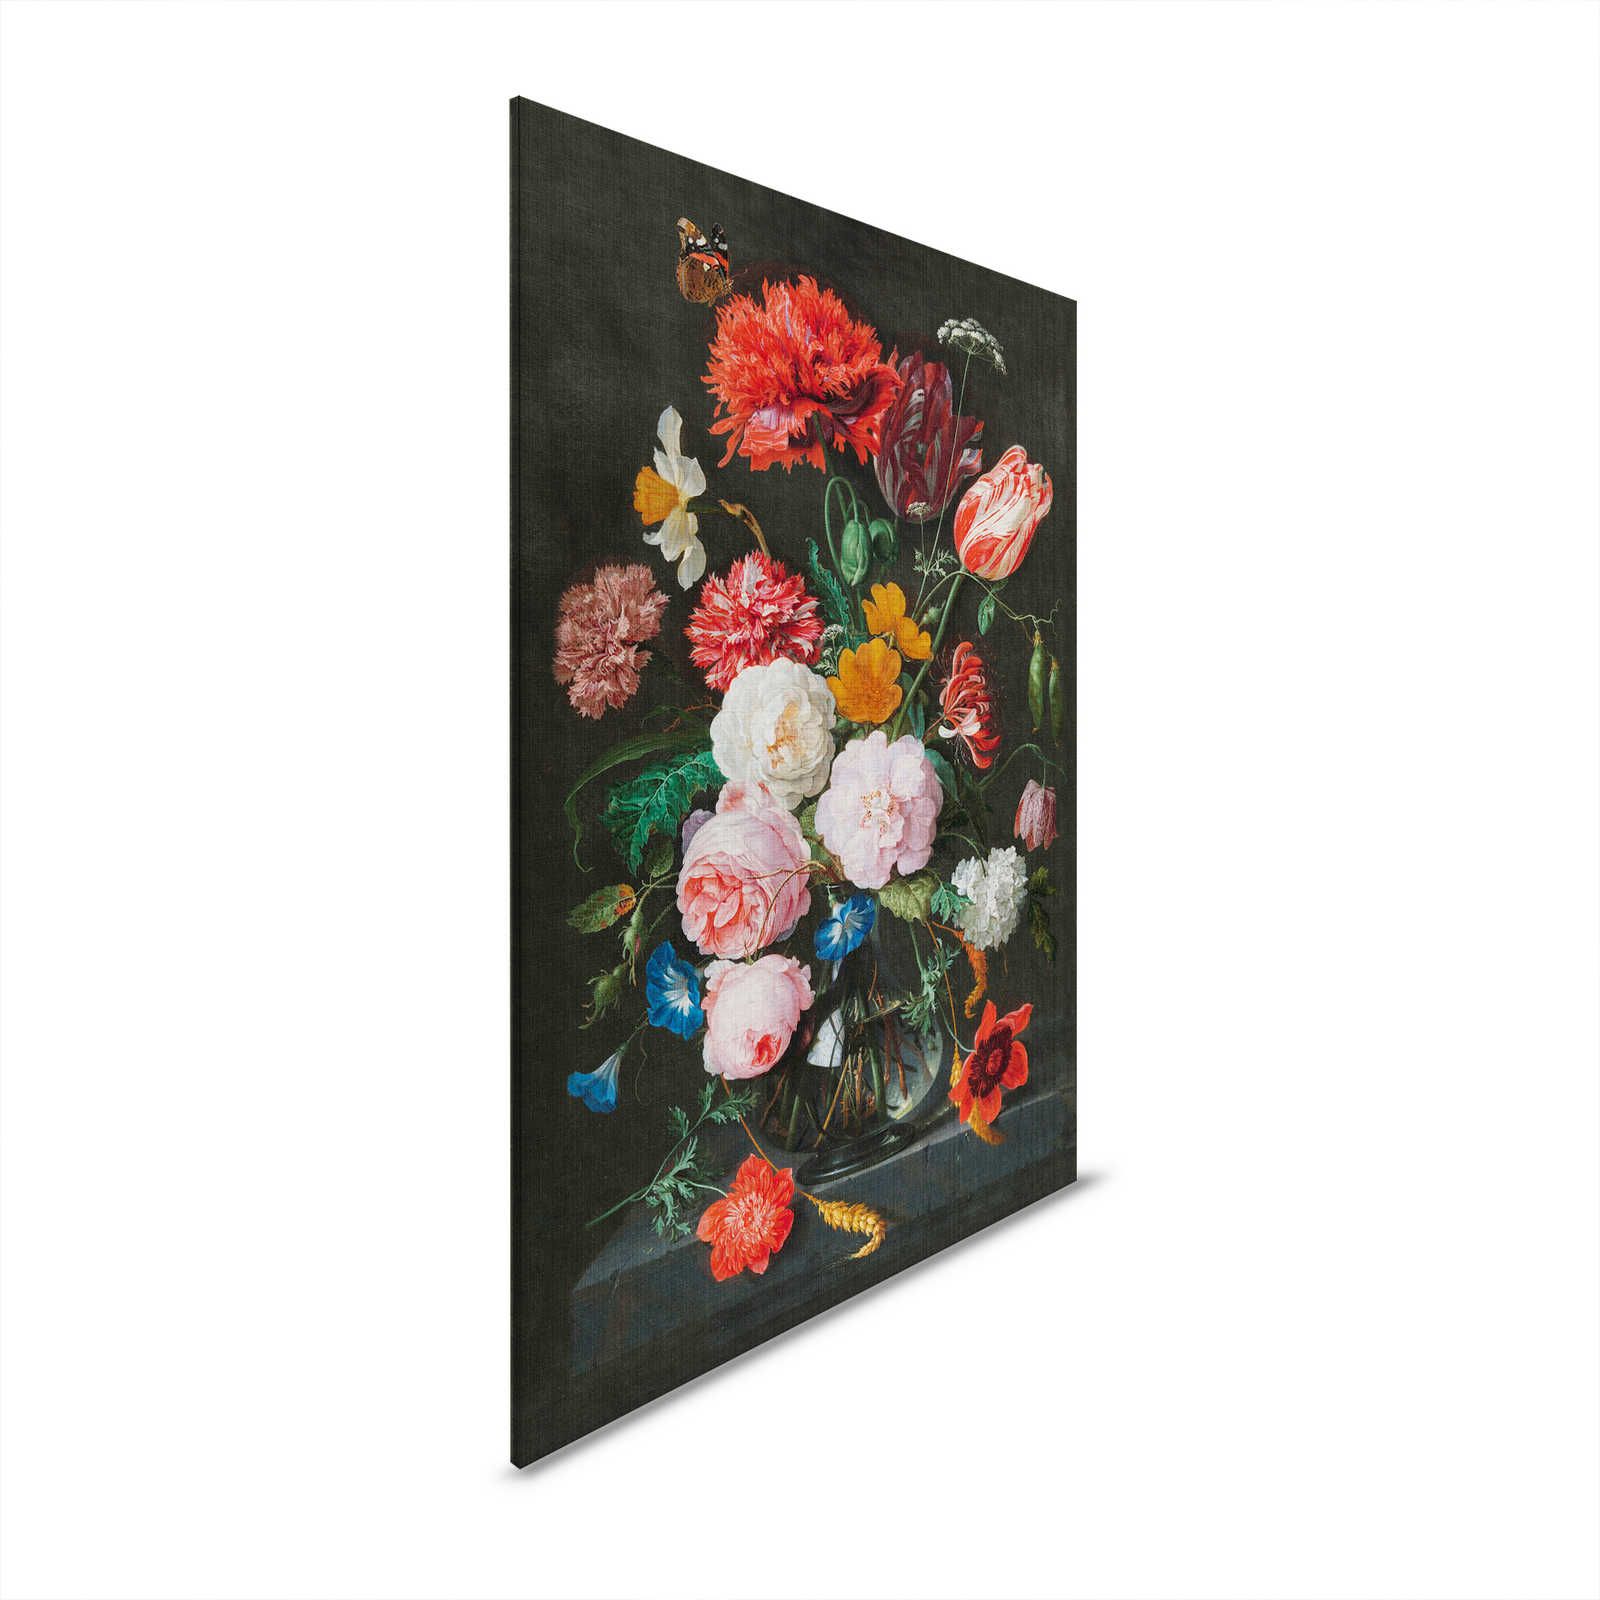 Artistas Studio 4 - Cuadro Flores Naturaleza Muerta con Rosas - 0,80 m x 1,20 m
